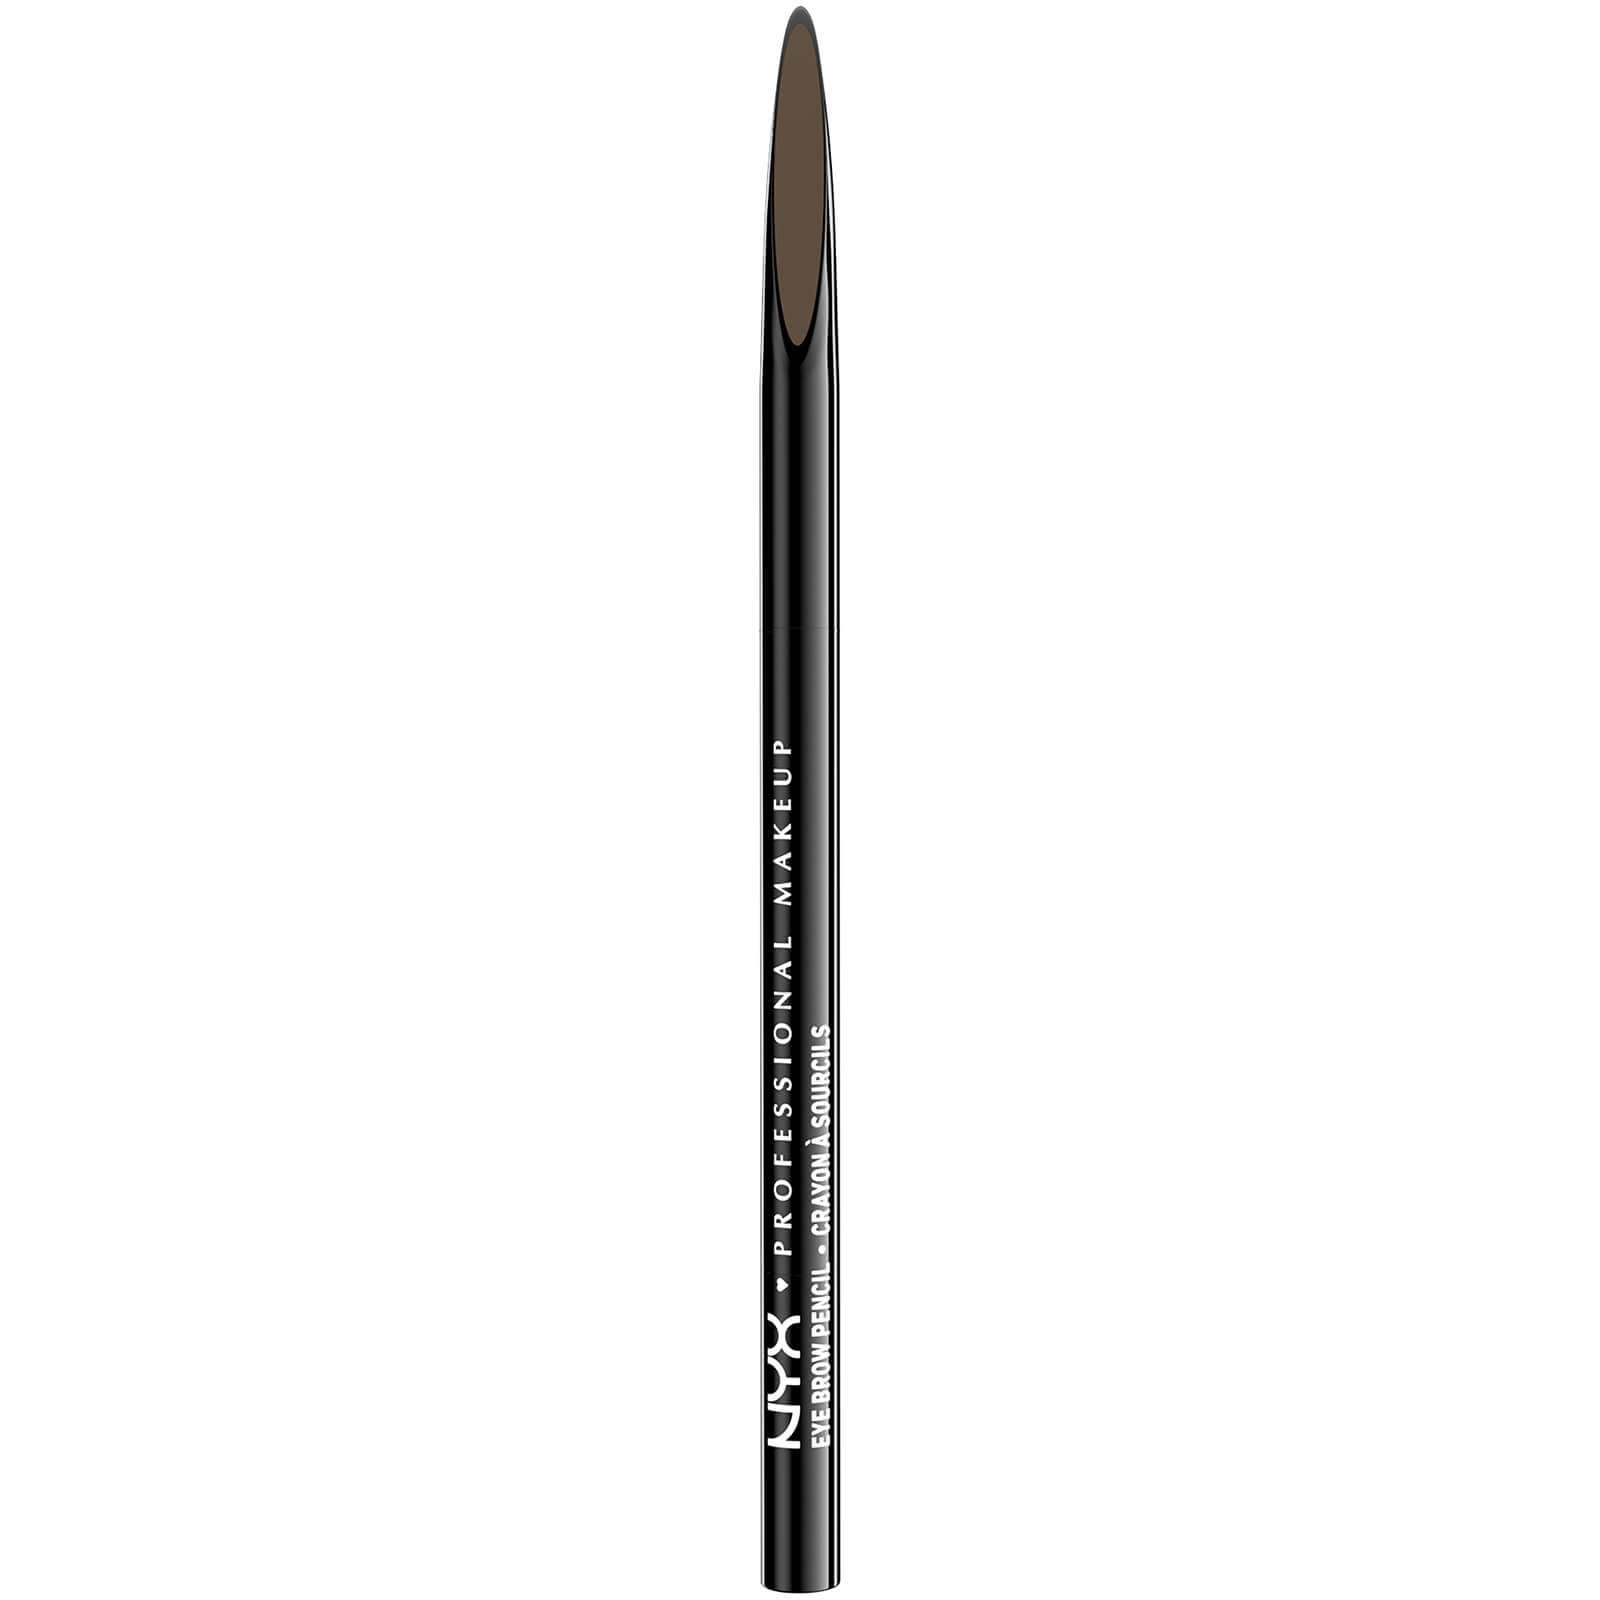 NYX Professional Makeup Precision Brow Pencil (Various Shades) - Ash Brown